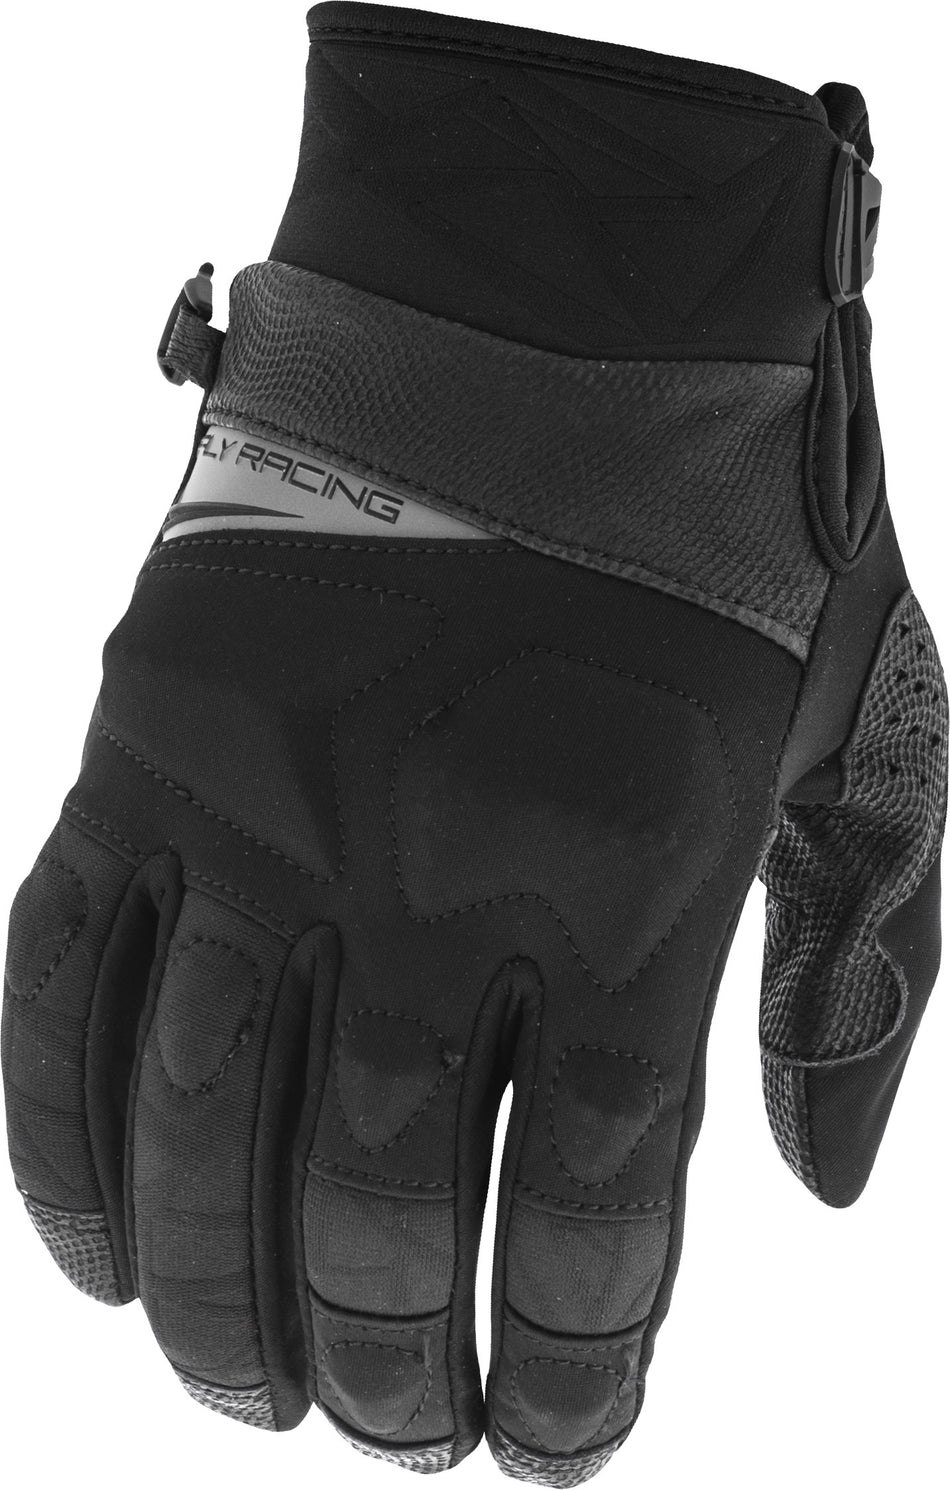 FLY RACING Boundary Gloves Black Sz 10 371-03010